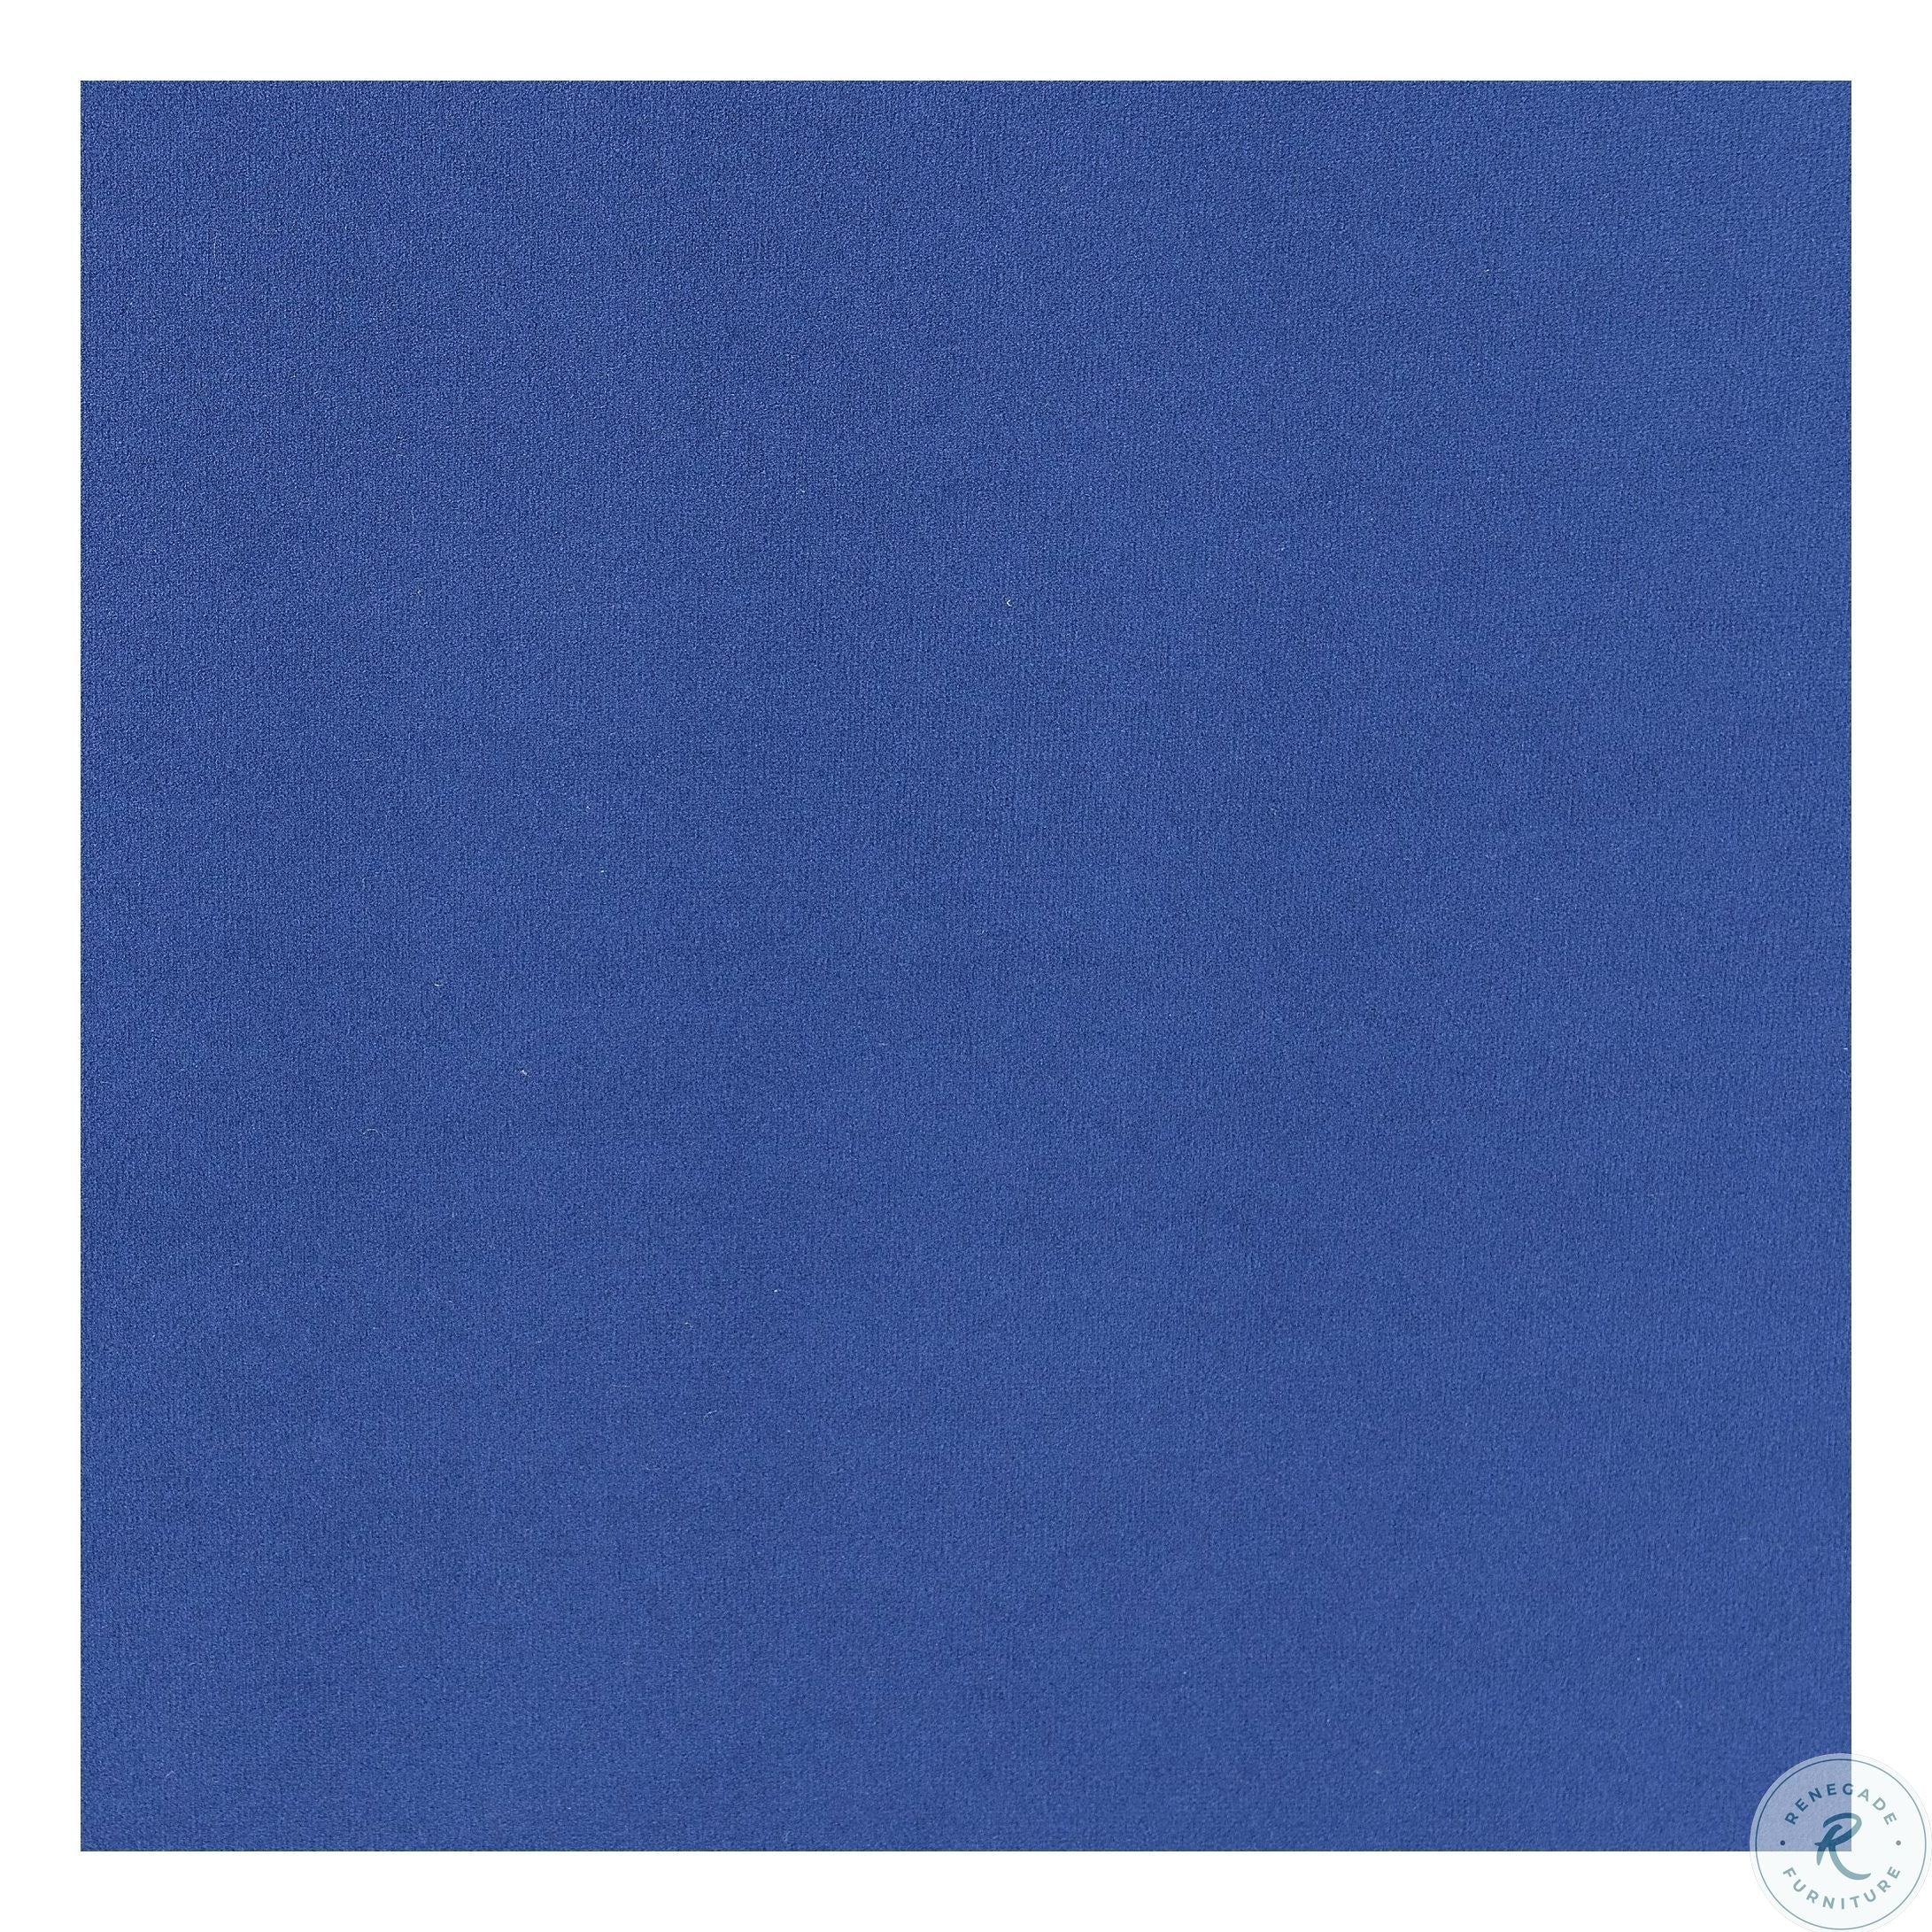 Jax Collection Sofa - Royal Blue